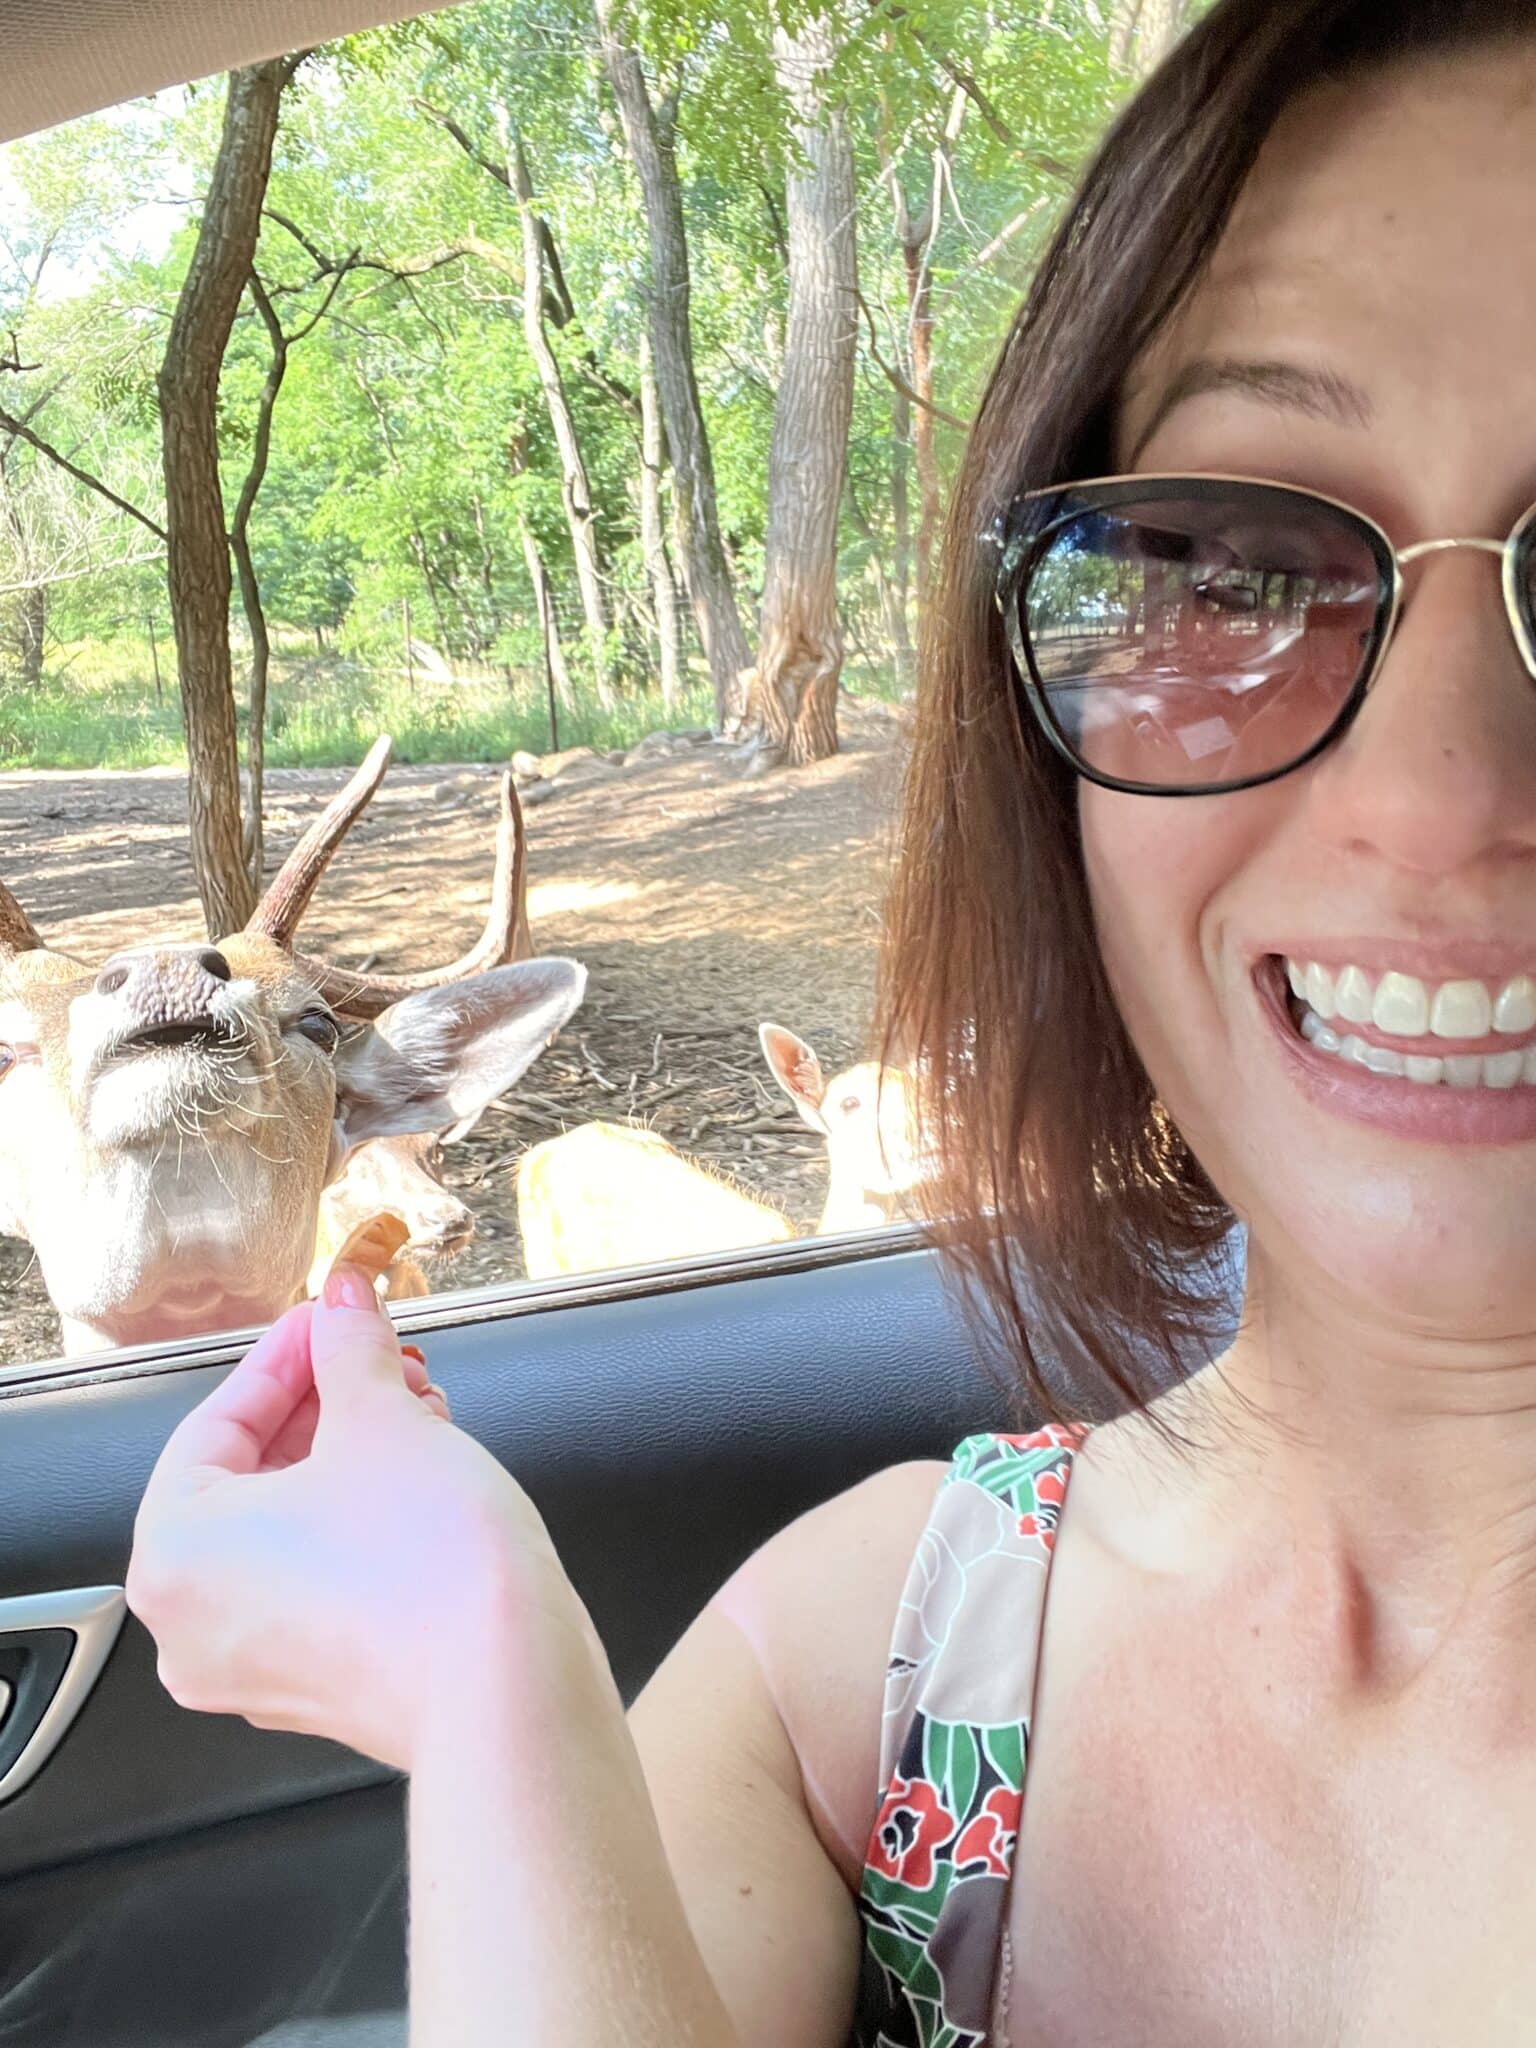 Shamba Safari: What to Expect When Visiting This Drive-Through Safari in Wisconsin